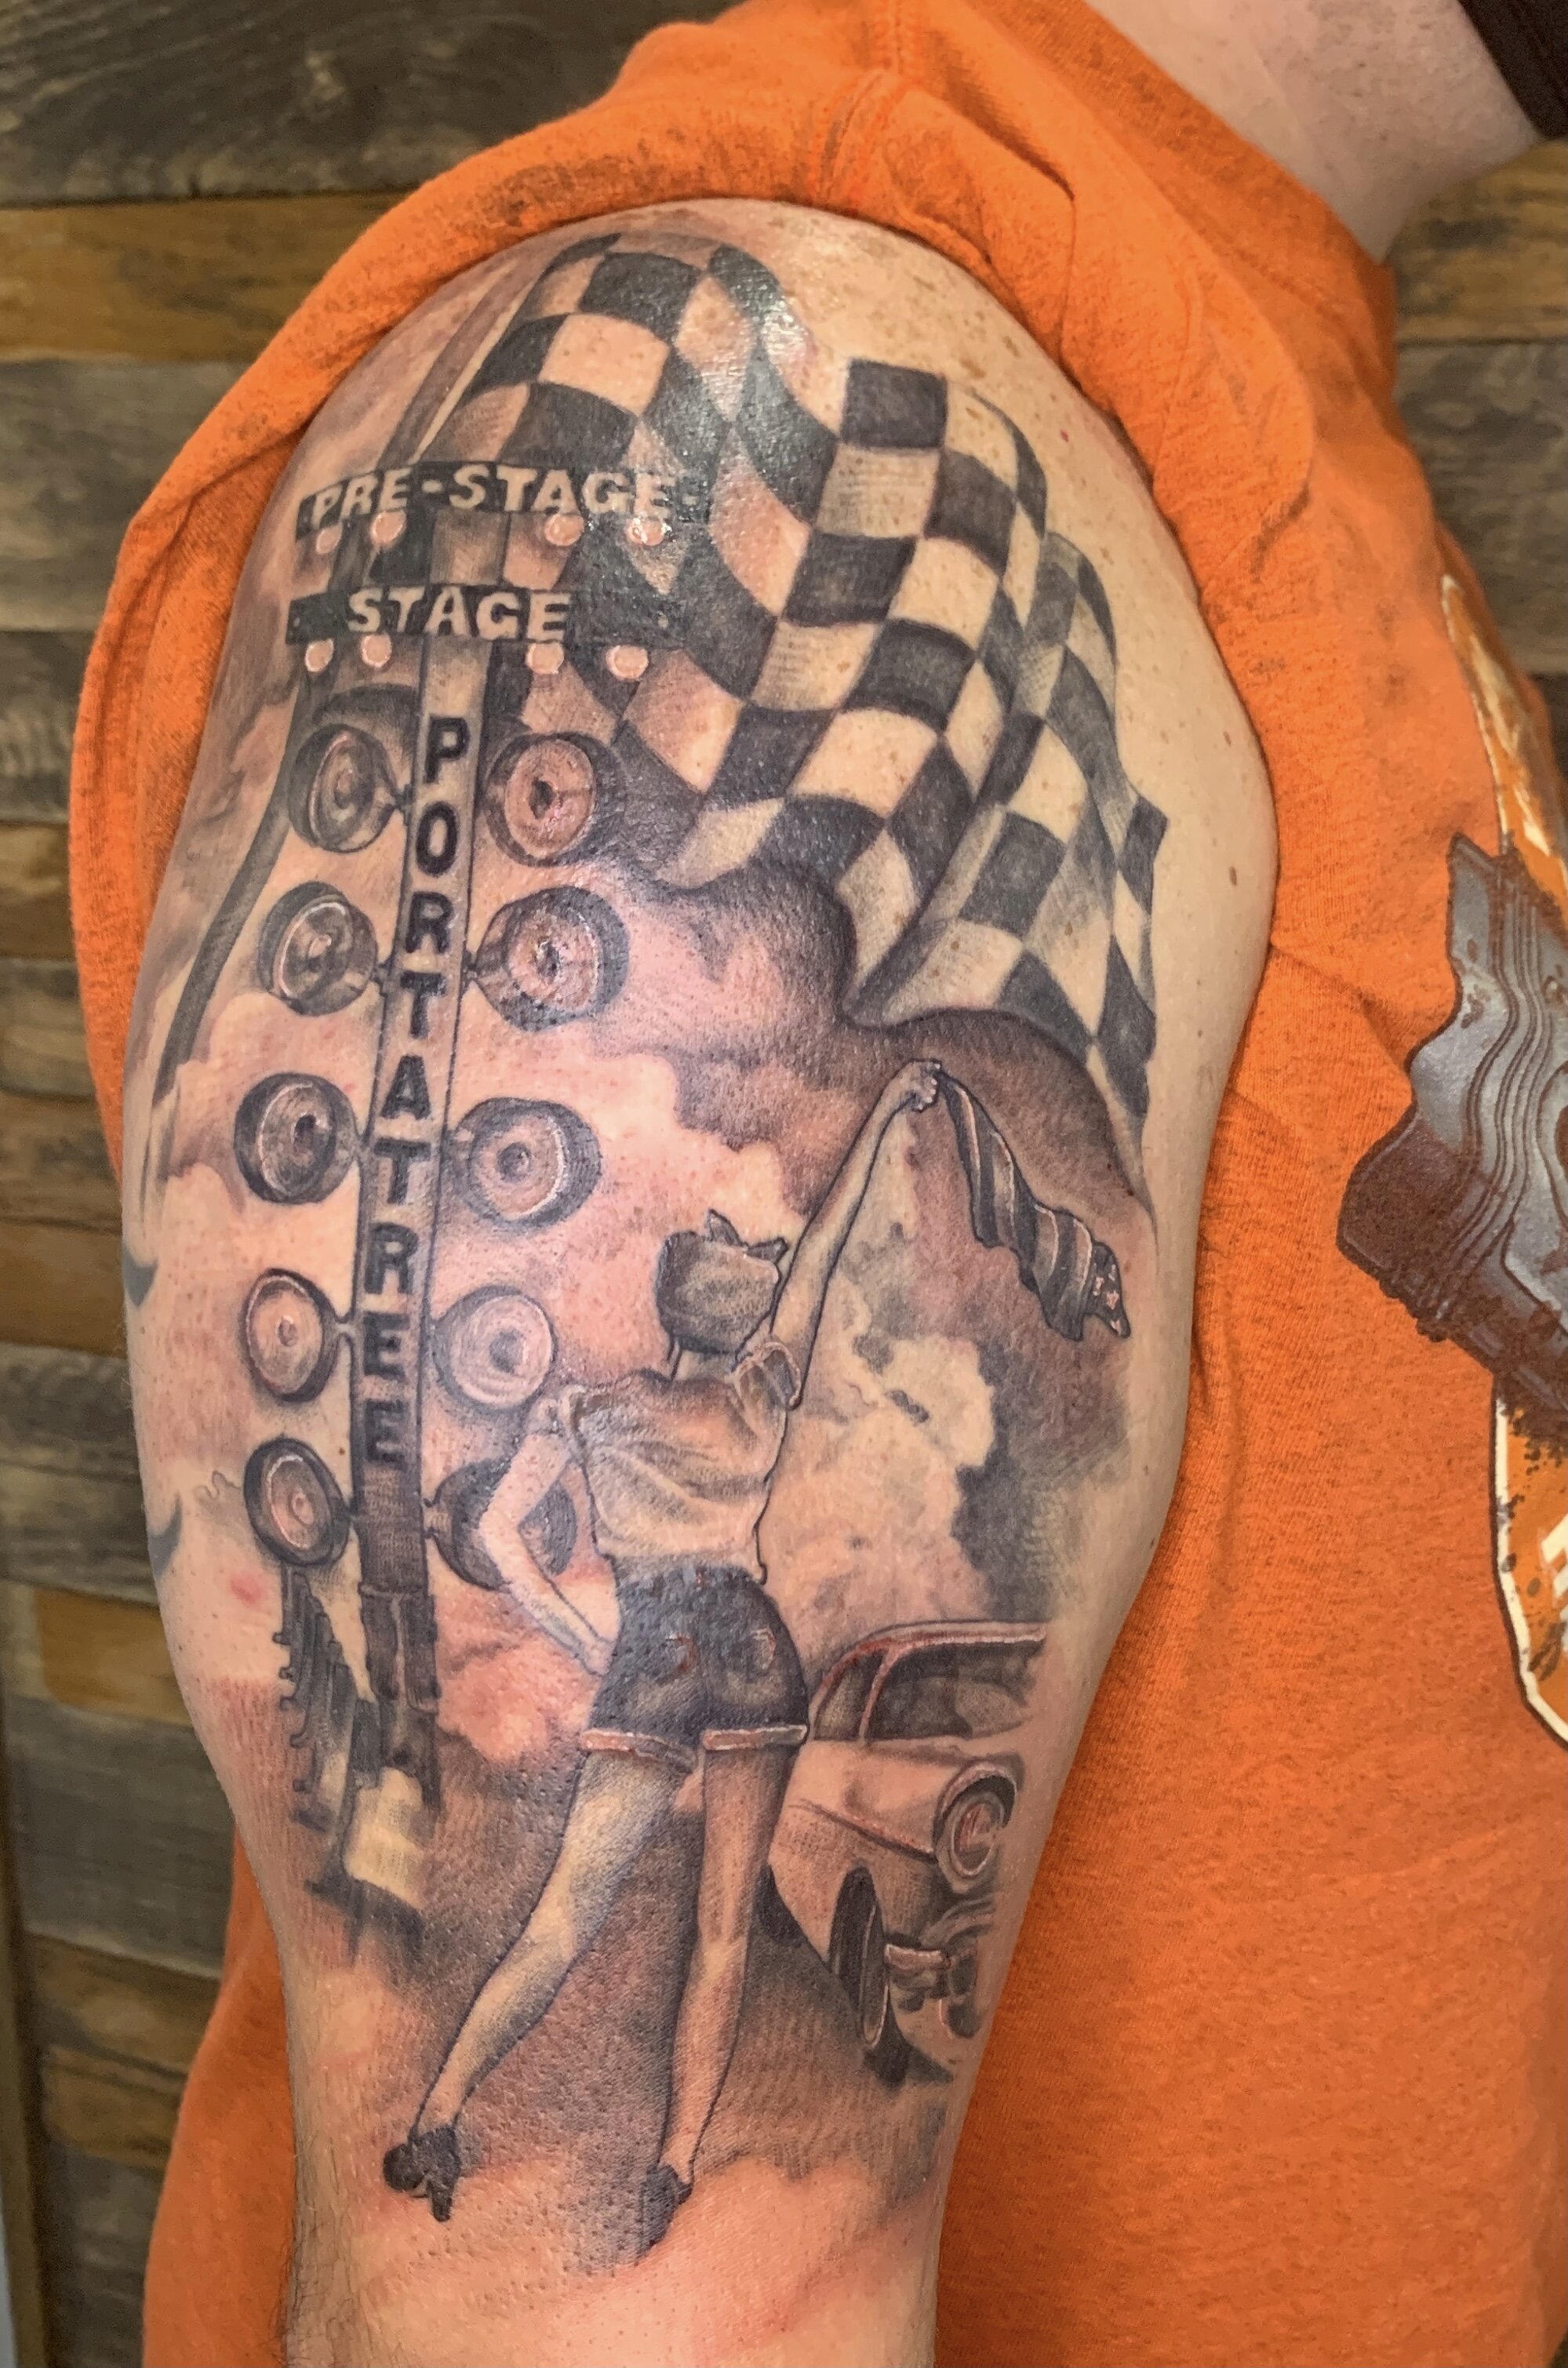 IMS Brickyard tattoos 2021 run gamut in advance of IndyCar race